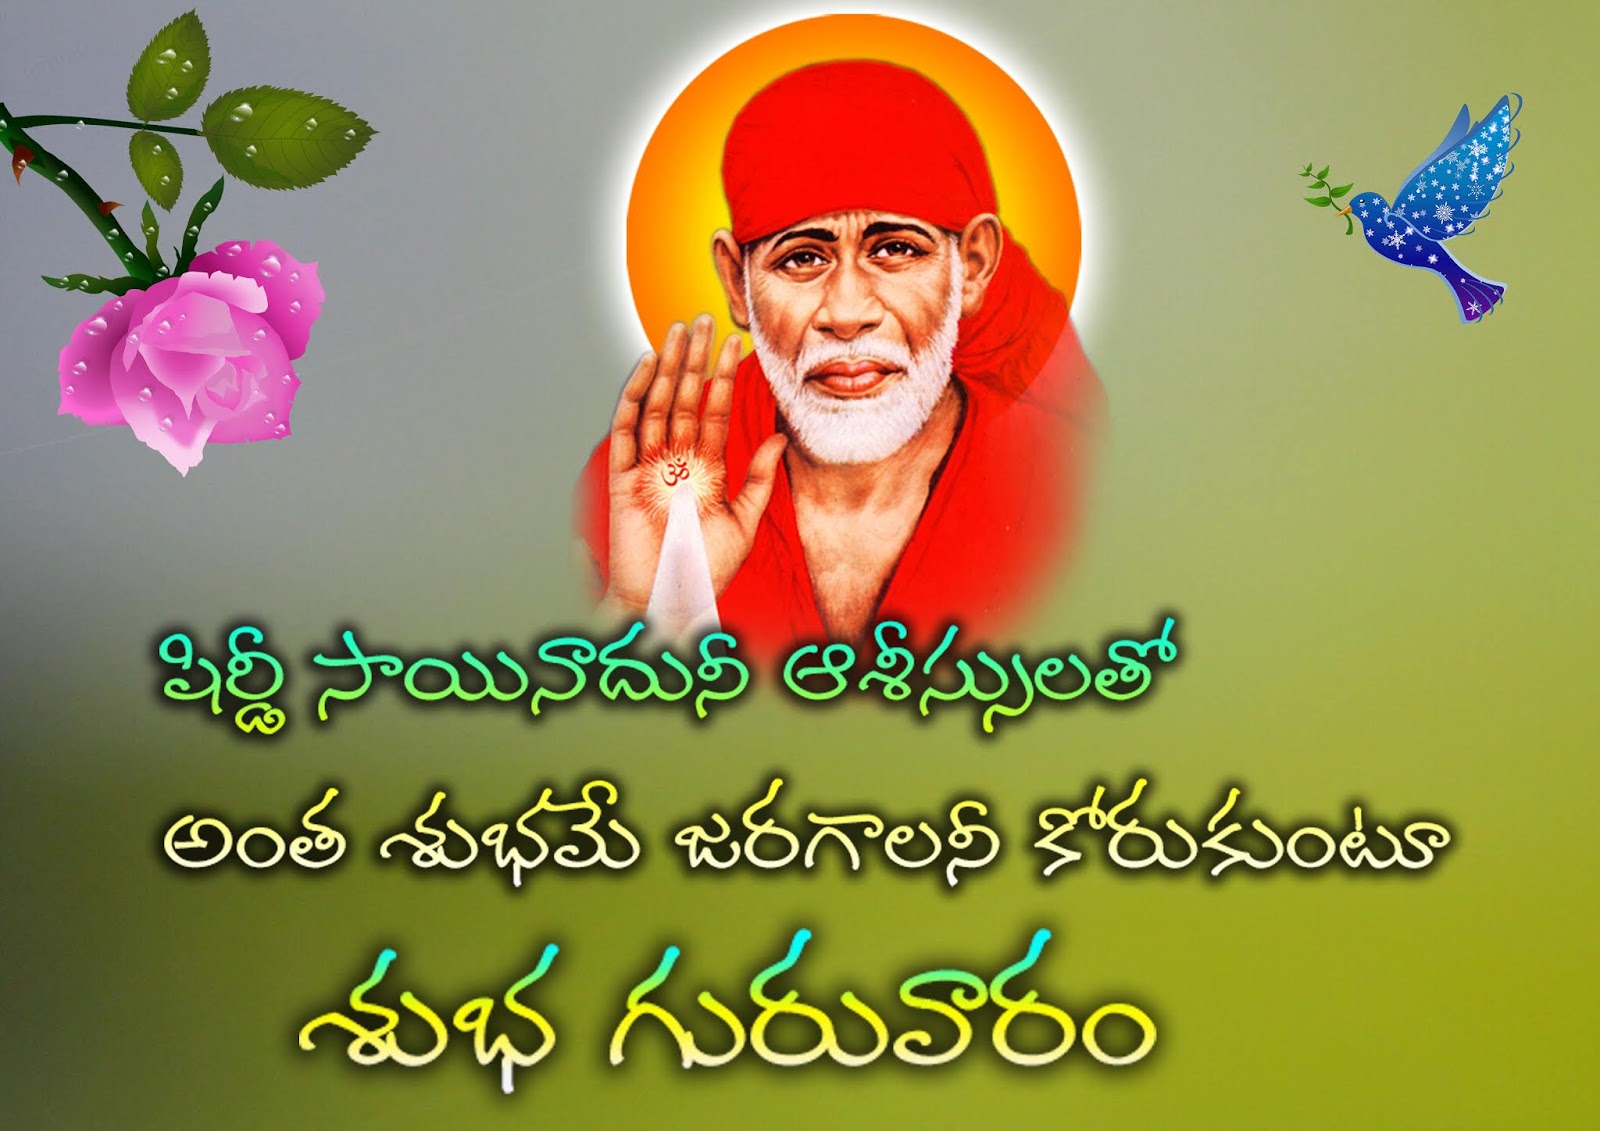 Powerful Christian Quotes Telugu